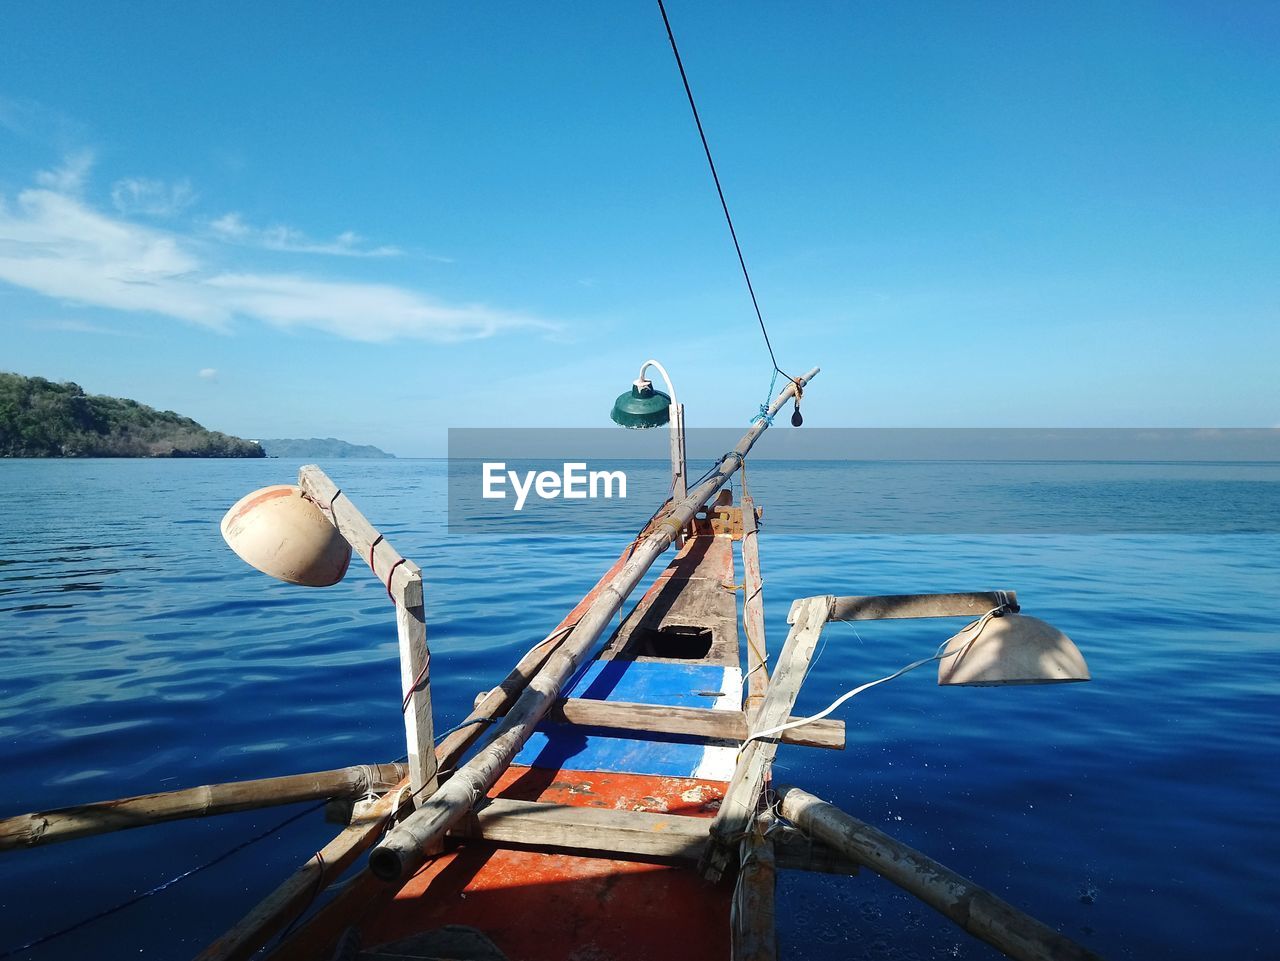 Fishing boat in sea against blue sky